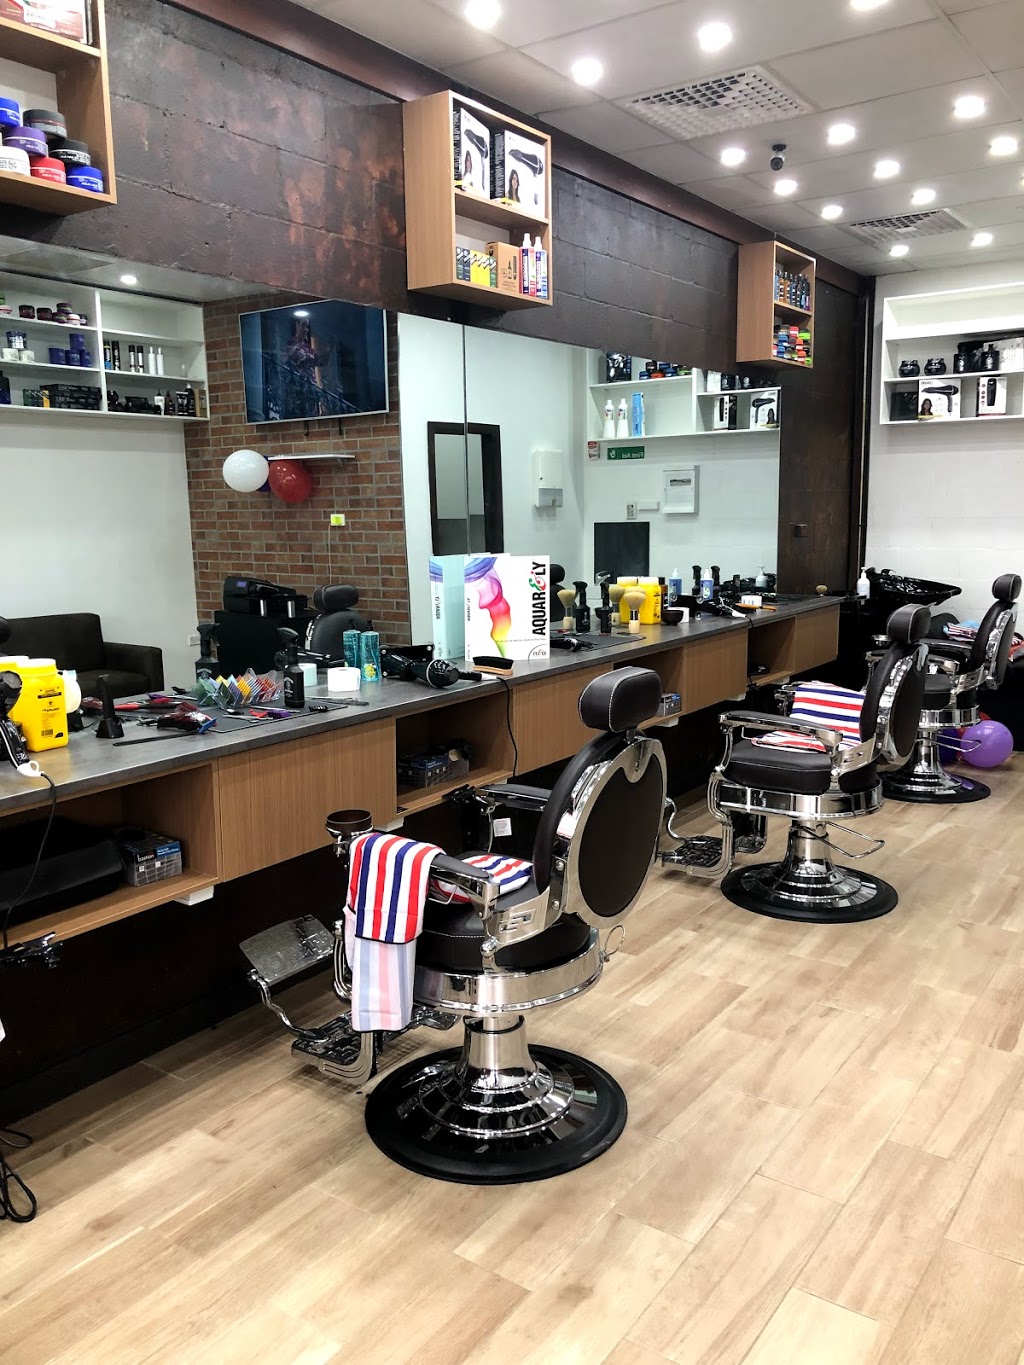 Urban touch Mens hair salon | Shop 3/60 Glenwood Park Dr, Glenwood NSW 2768, Australia | Phone: (02) 8678 6442